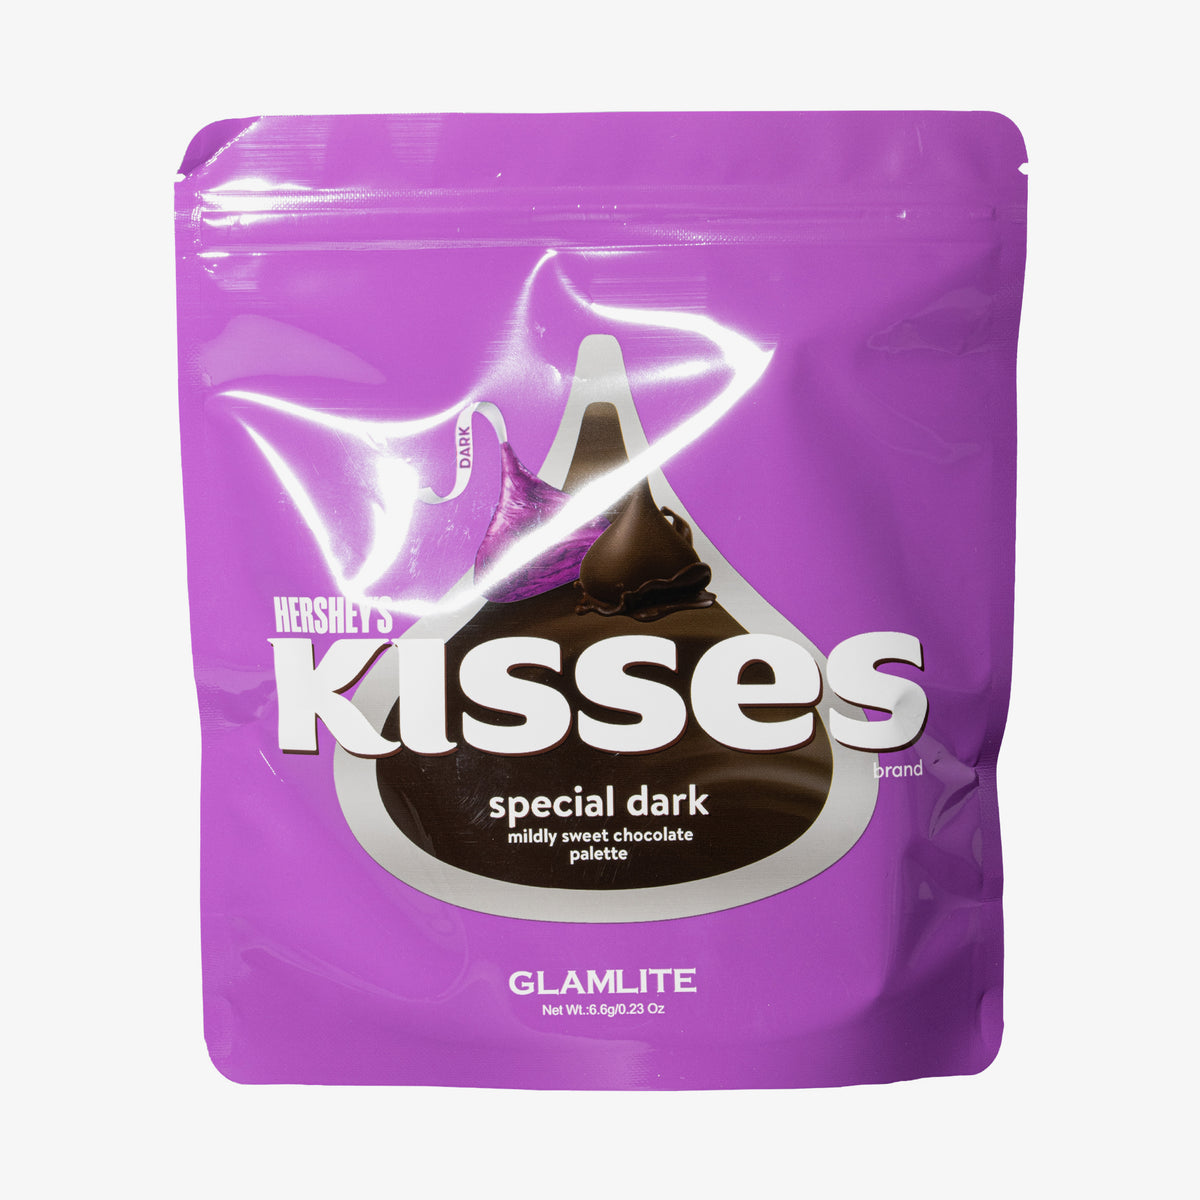 Glamlite Cosmetics | Hershey's Kisses x Glamlite Special Dark Palette